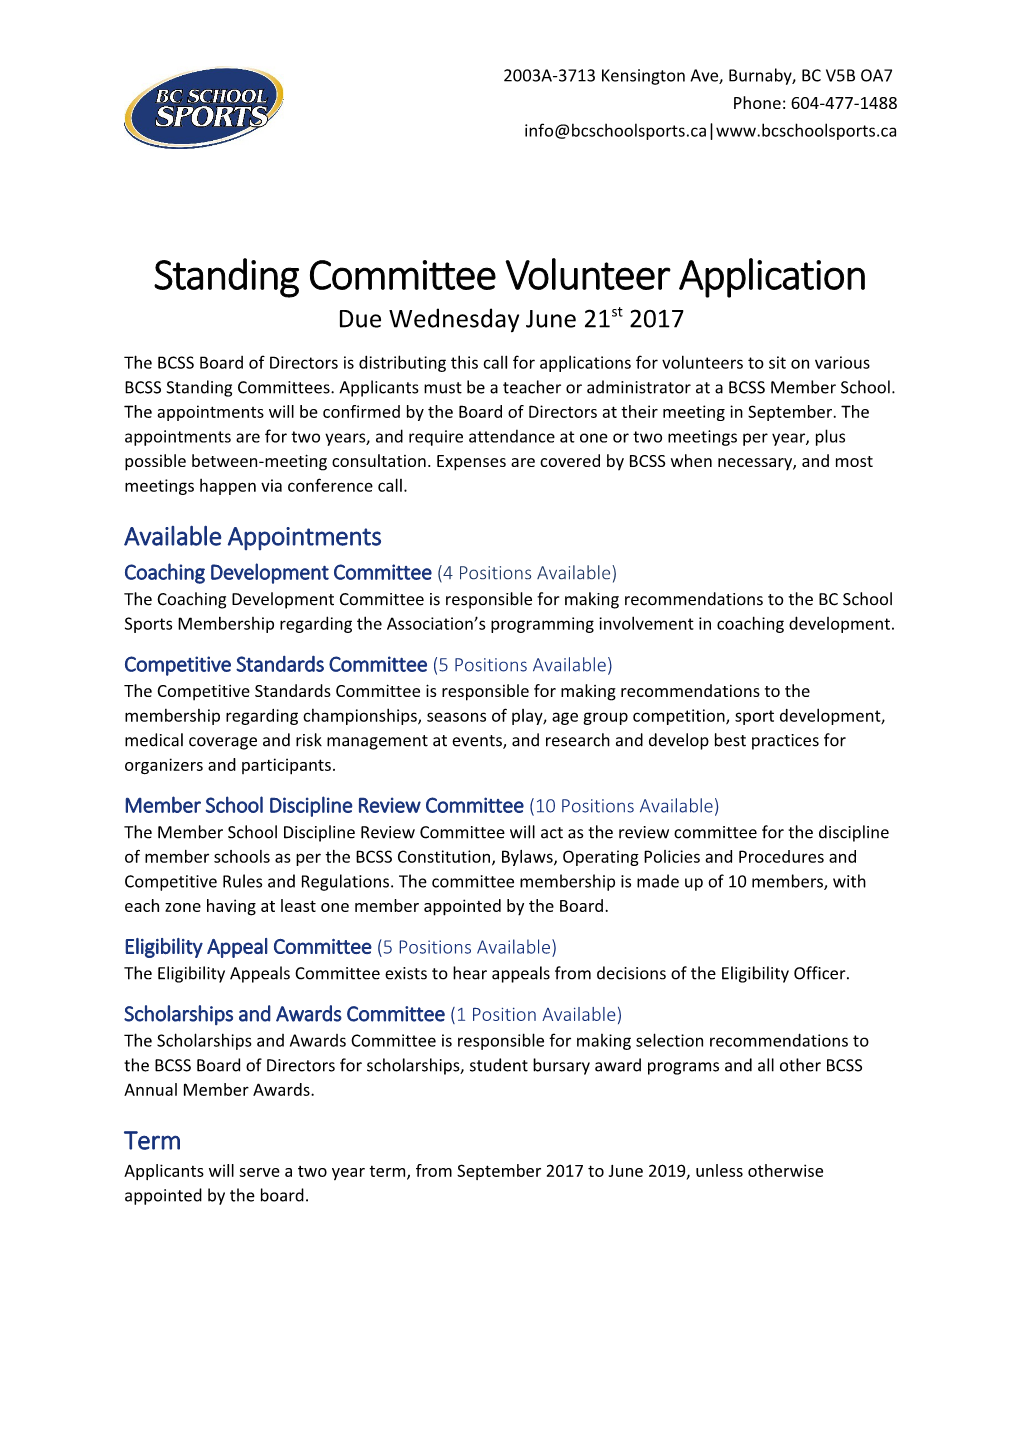 Standing Committee Volunteer Application